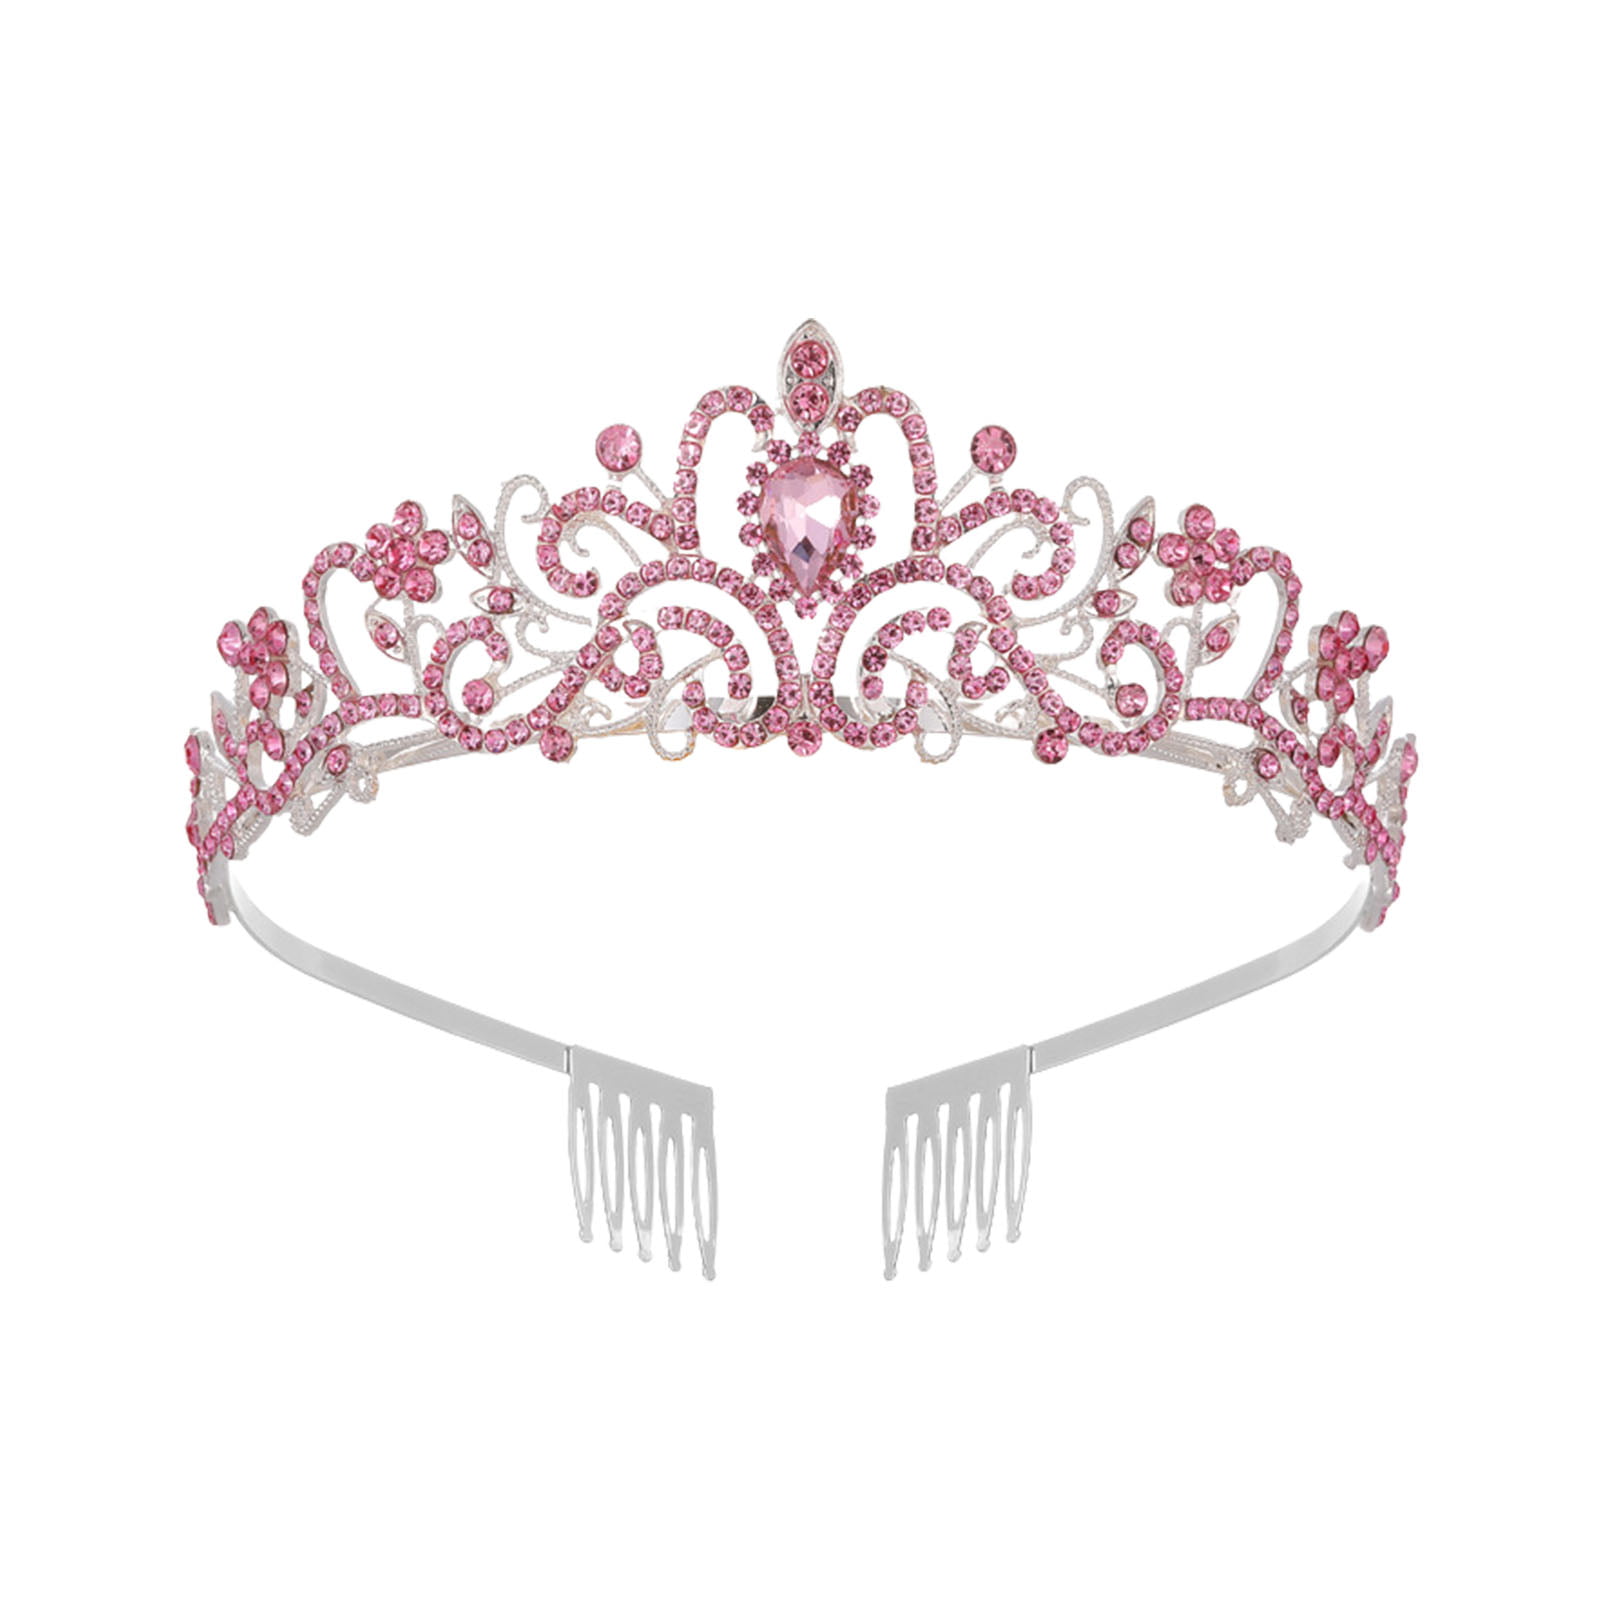 Details about   Bridal Princess Austrian Stunning Crystal Hair Tiara Wedding Crown Veil Headband 